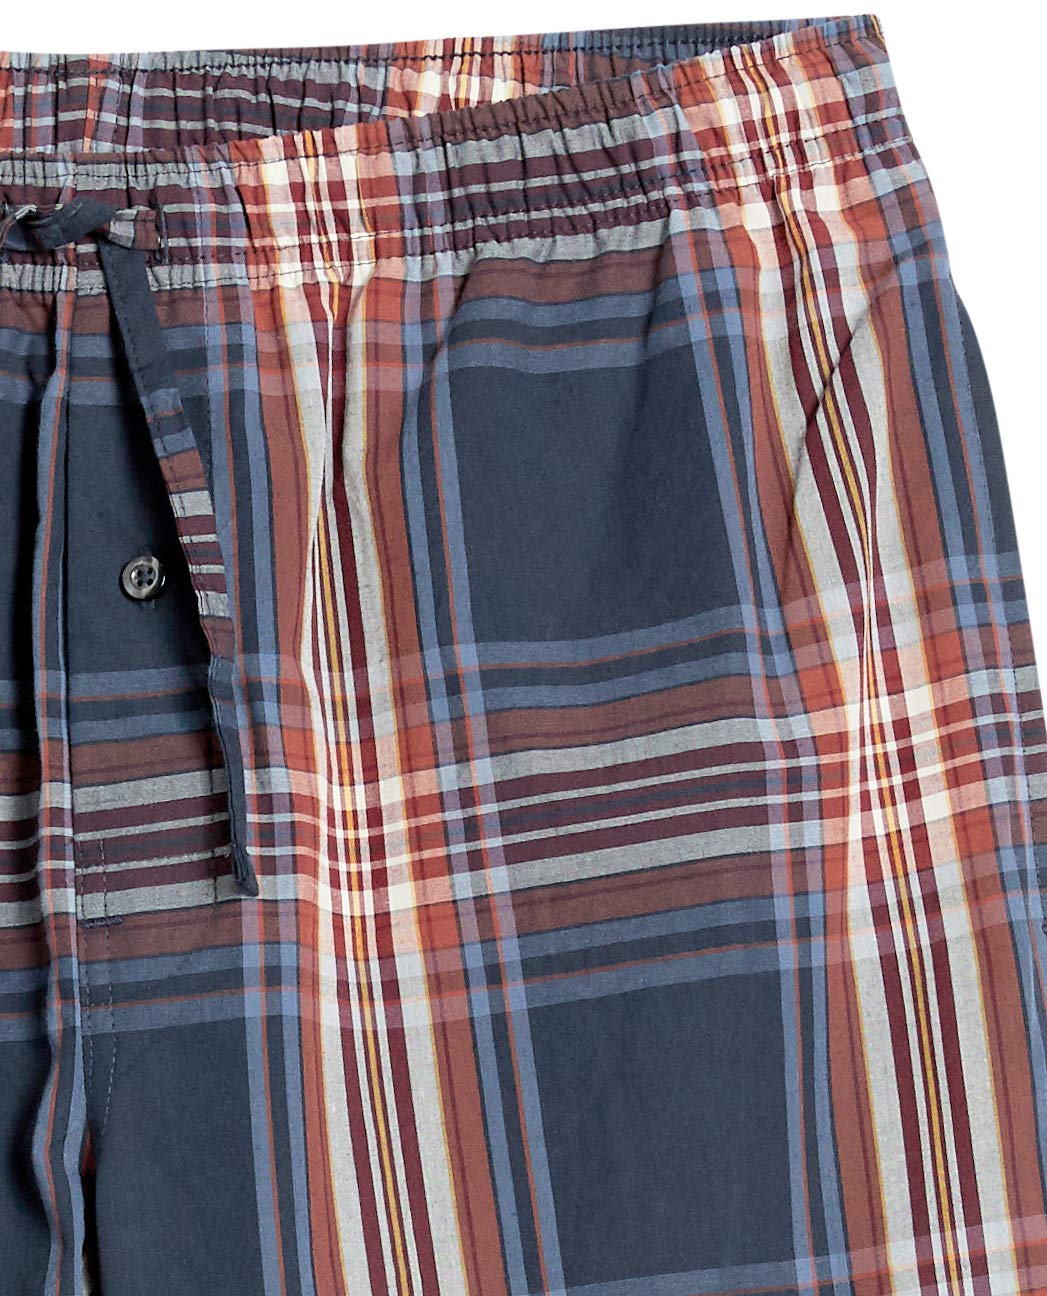 Amazon Essentials Men's Straight-Fit Woven Pajama Pant